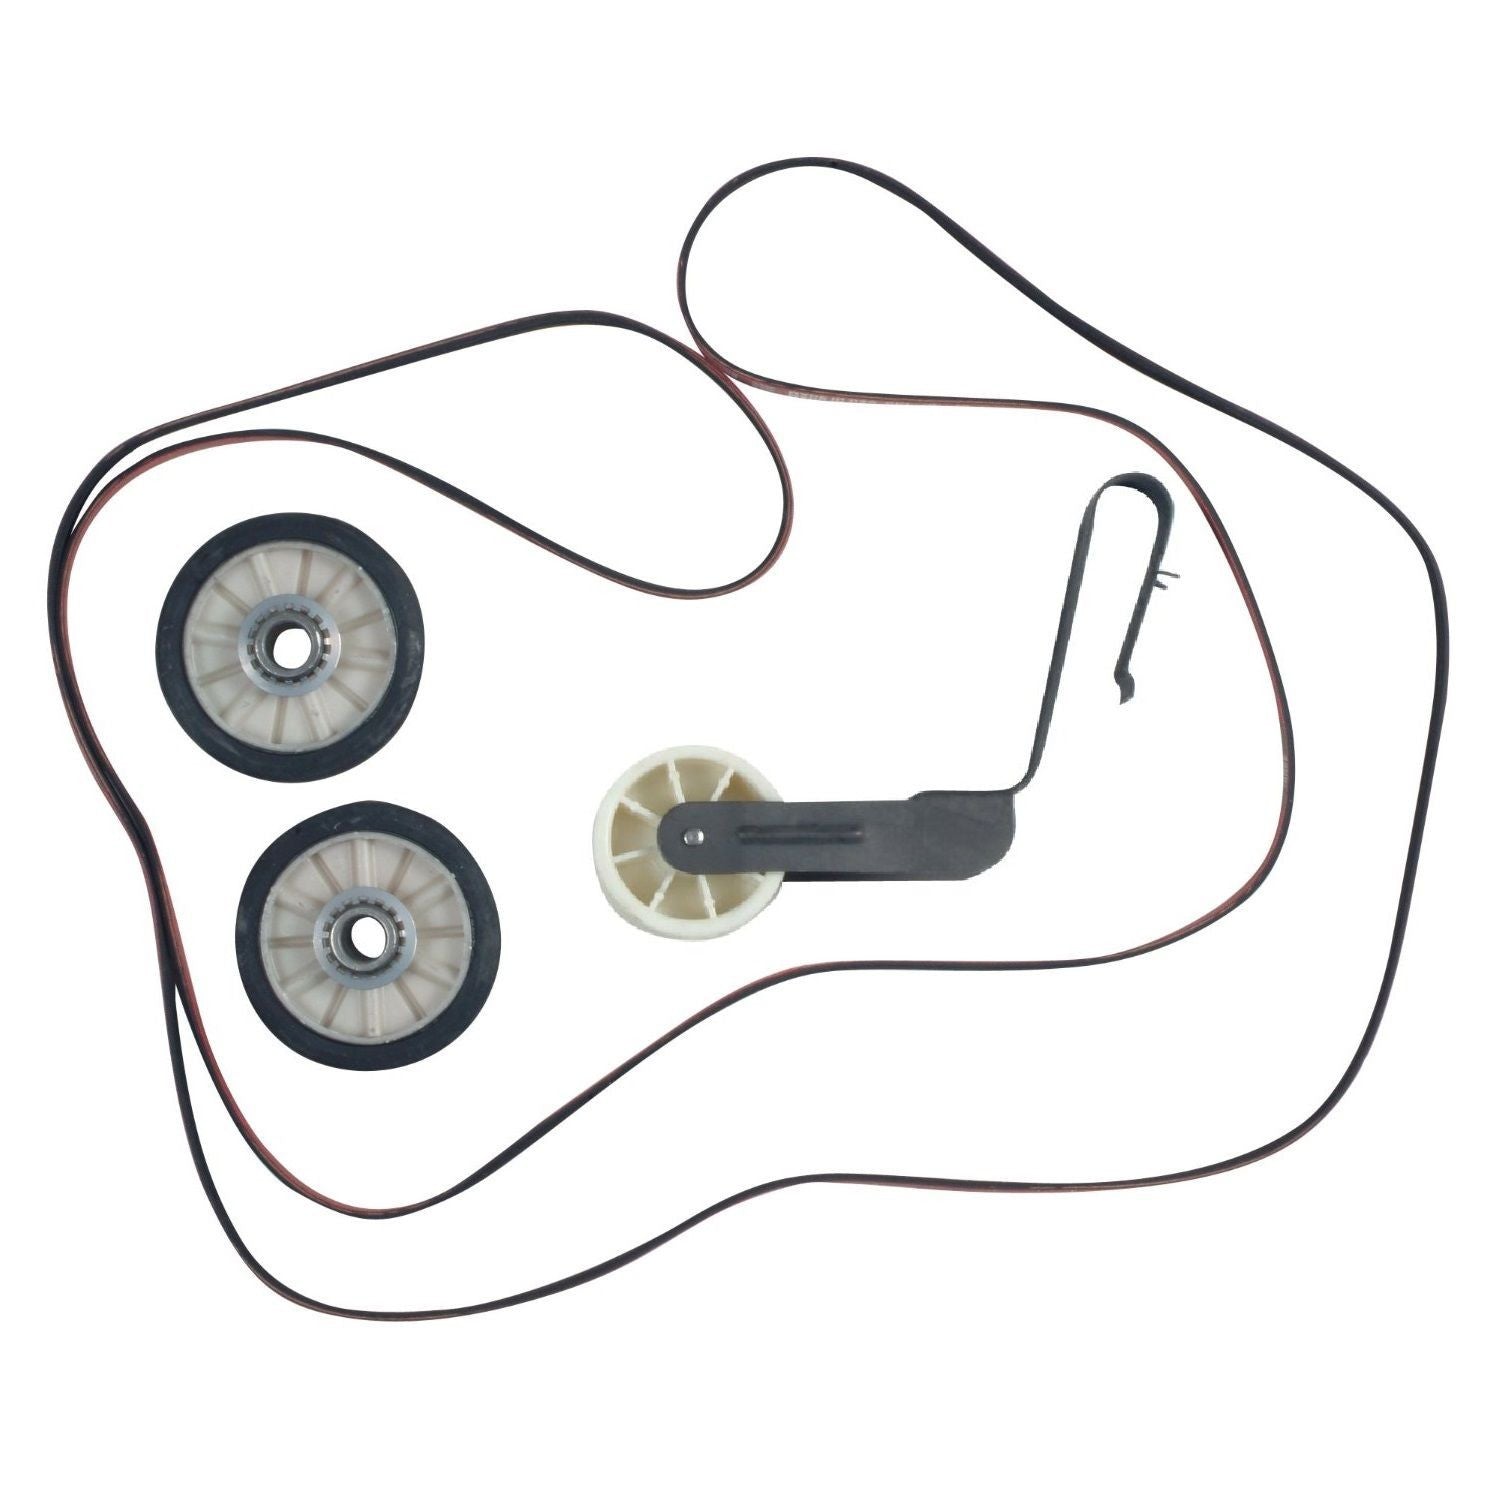 Whirlpool WED4800XQ1 Dryer Belt, Pulley & Roller Repair Kit Replacement